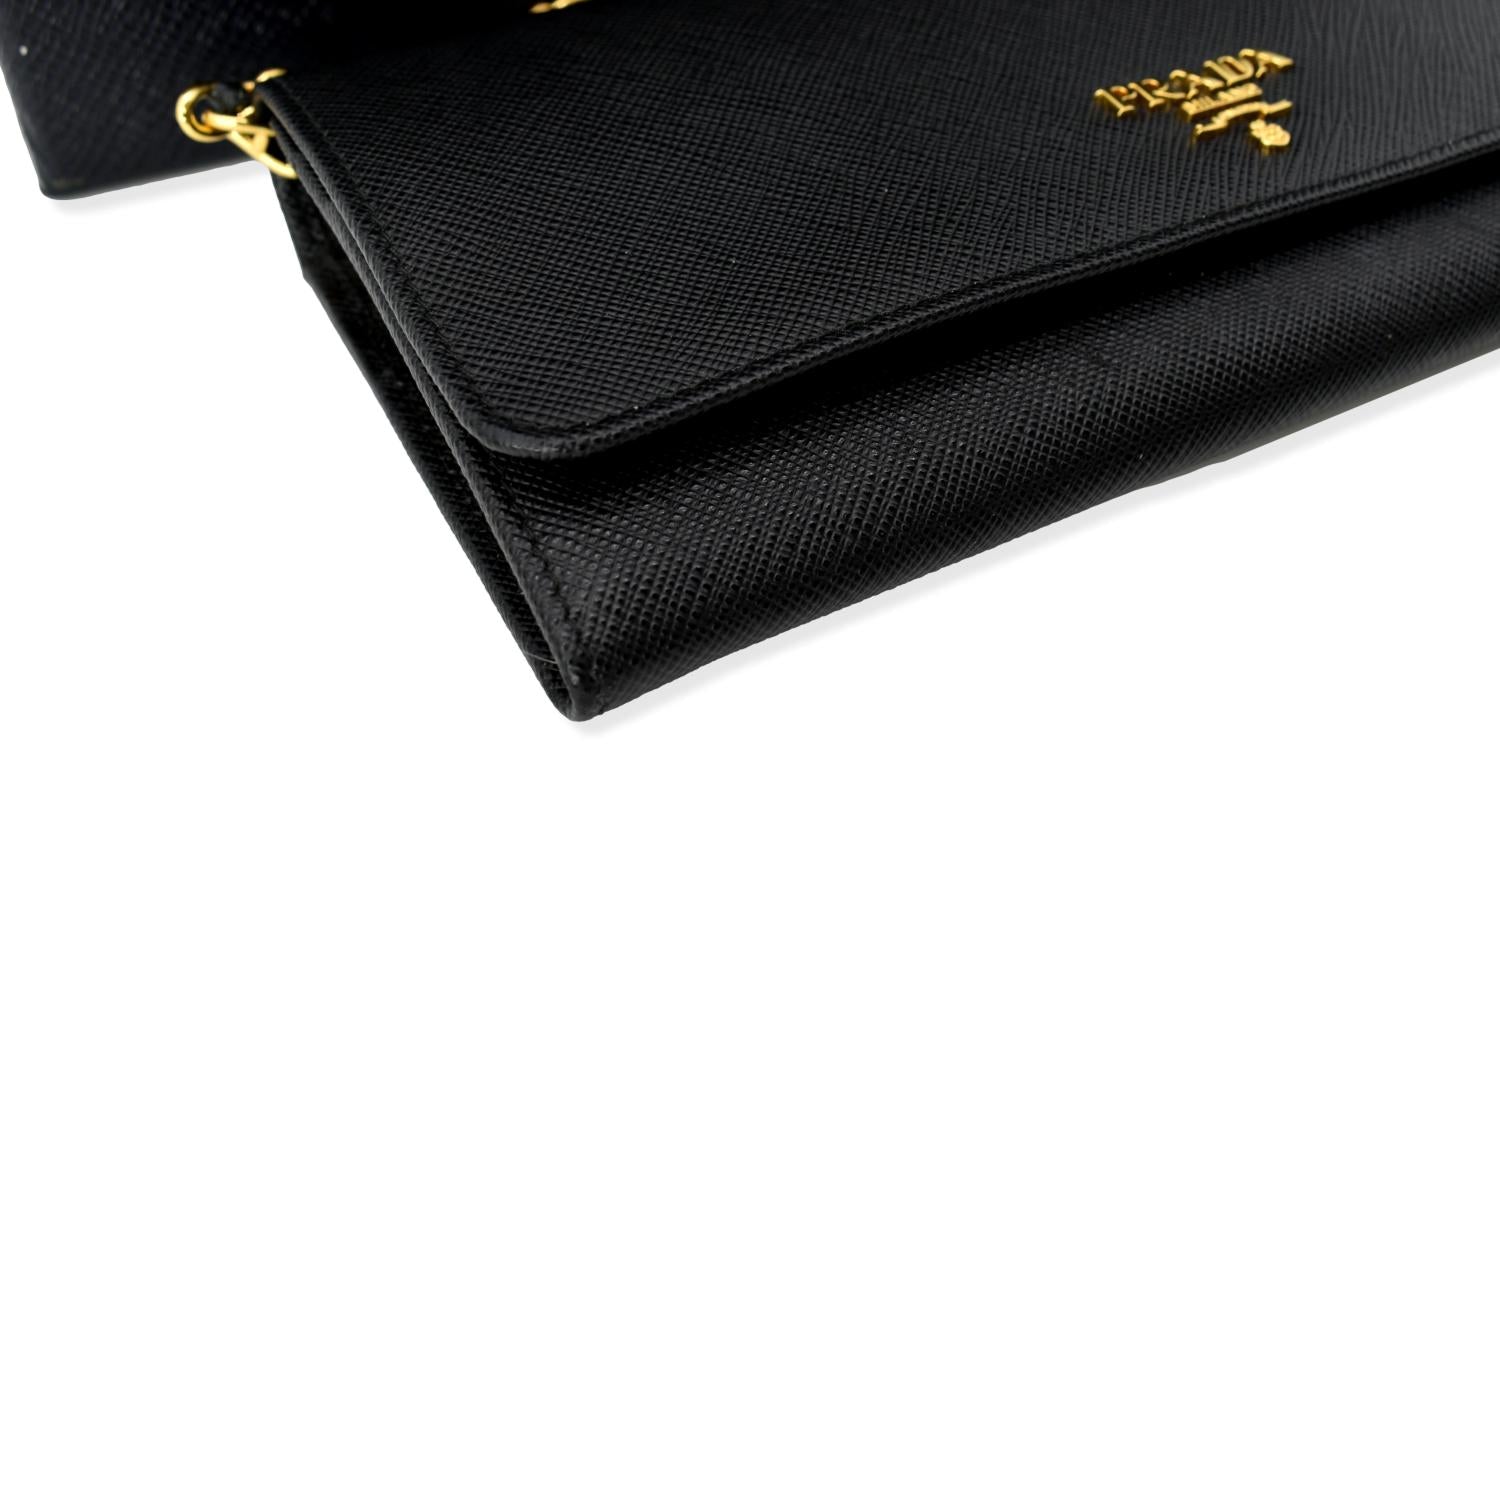 Saffiano leather wallet PRADA